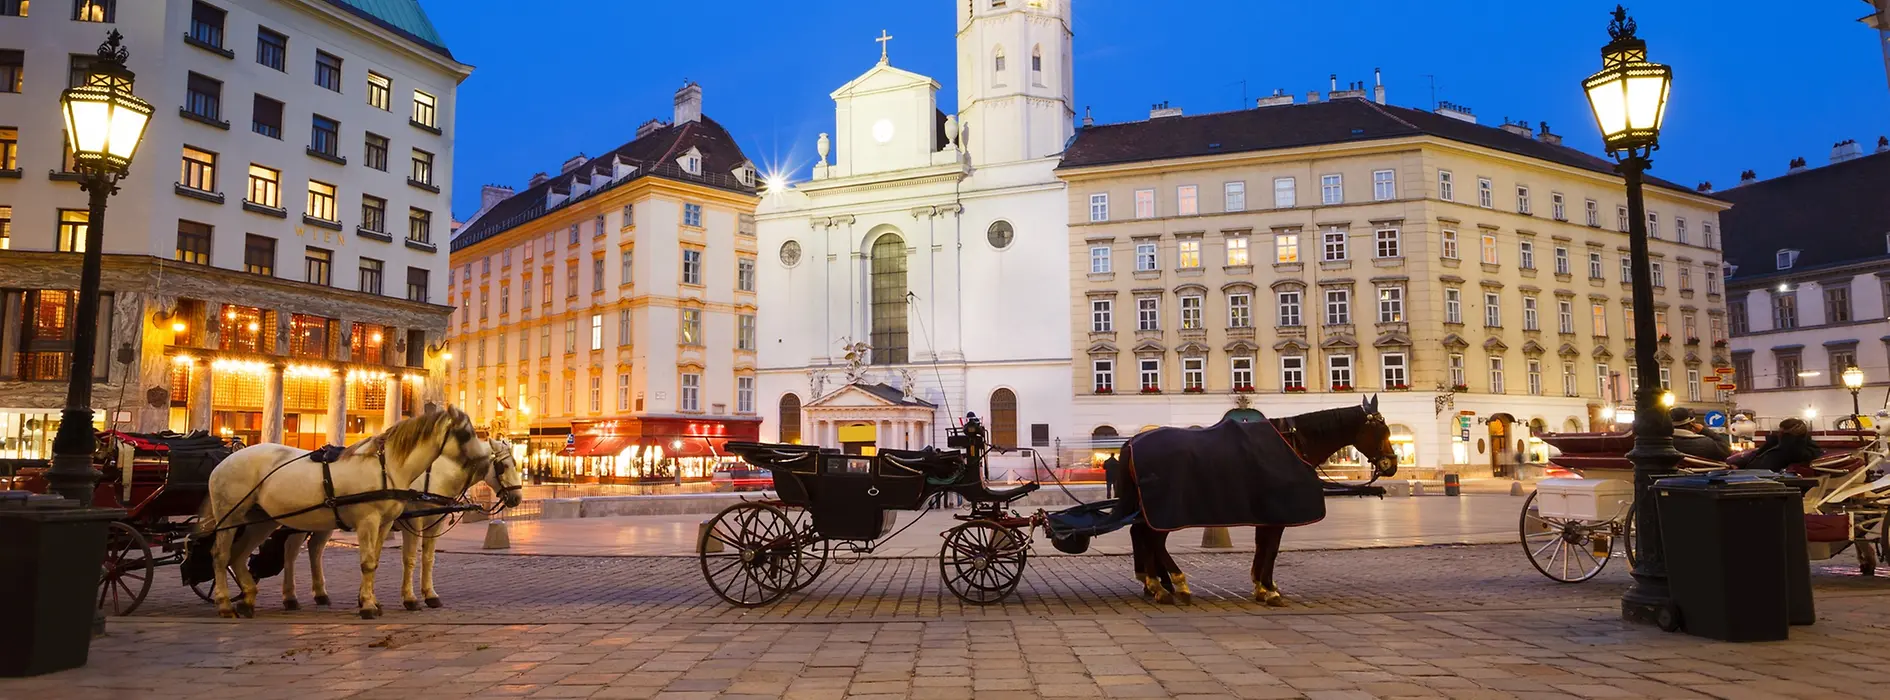 horse-drawn carriage on Michaelerplatz